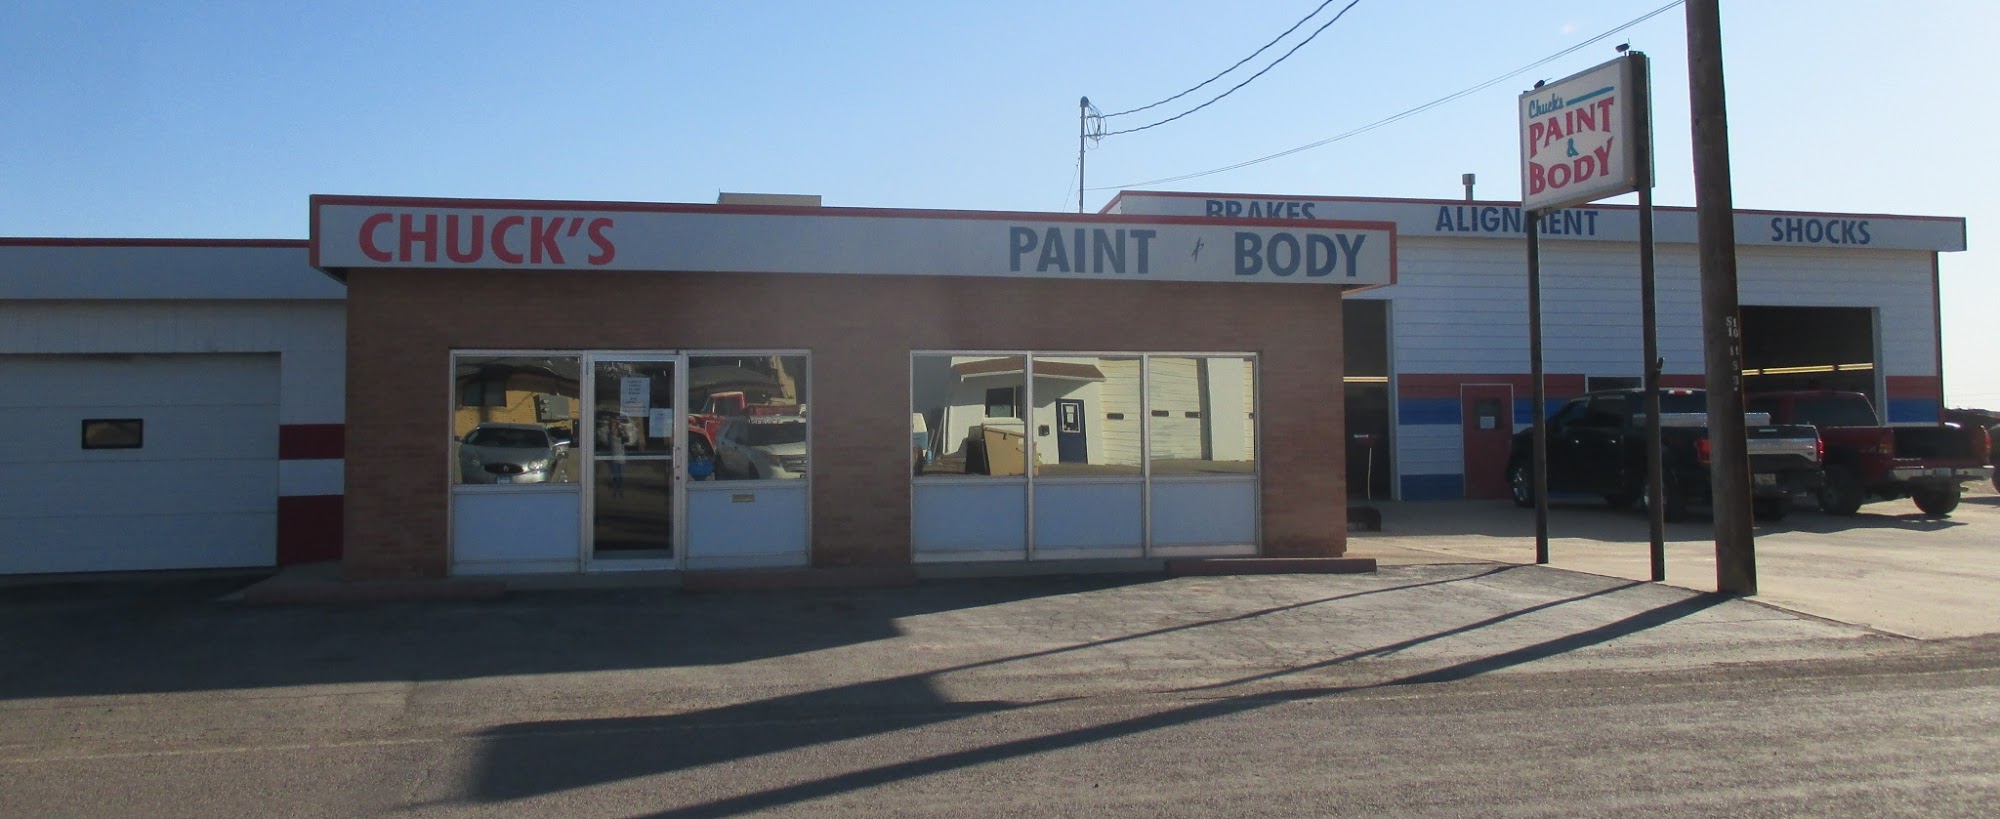 Chuck's Paint & Body Inc